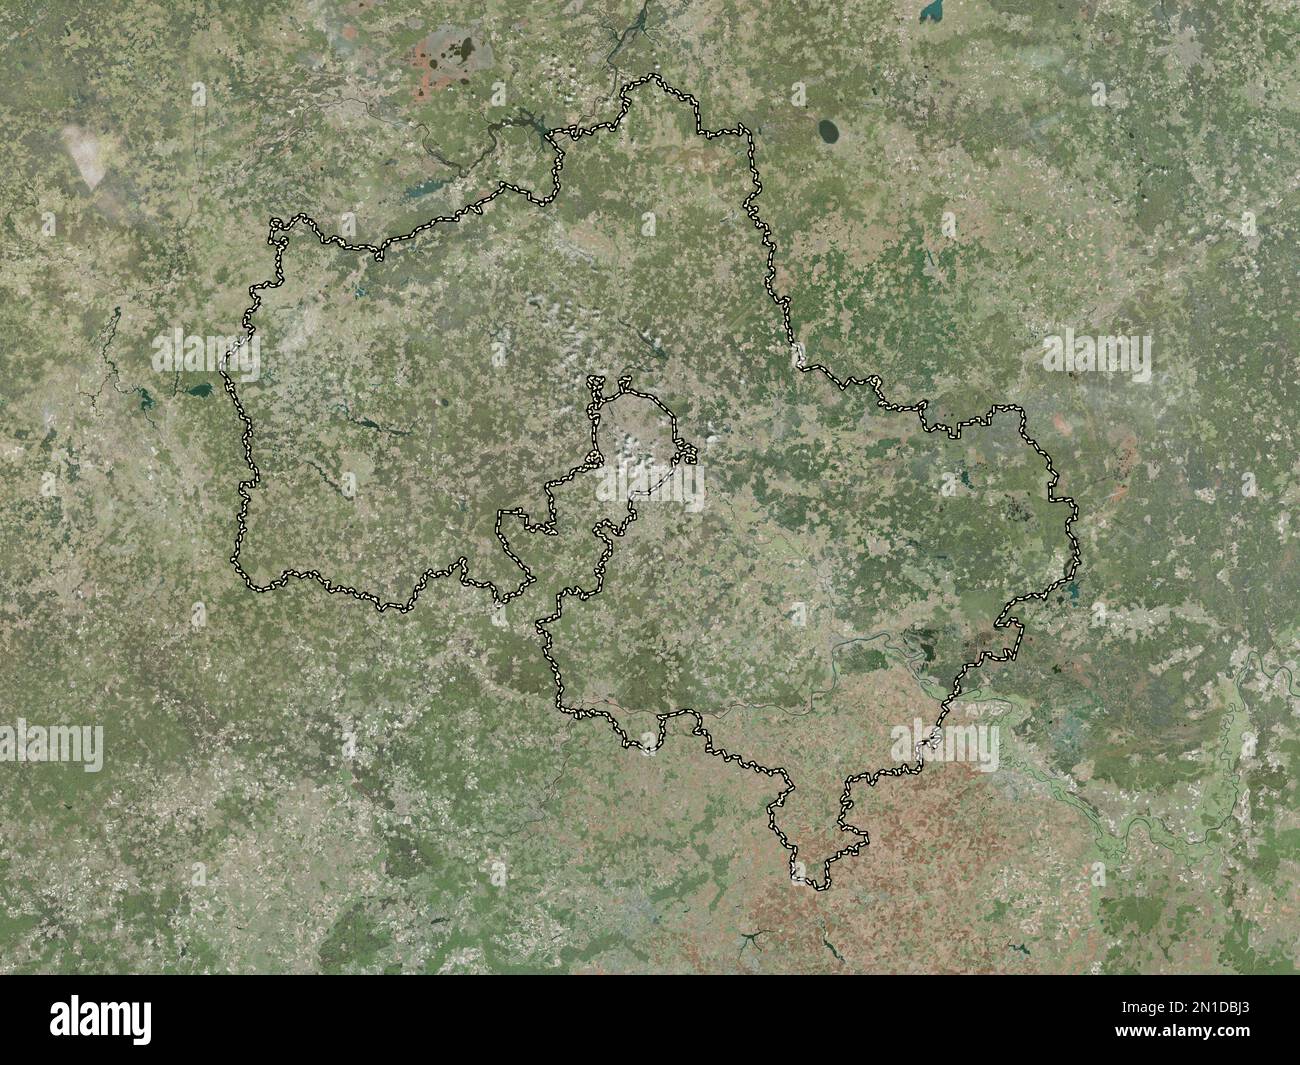 Moskva, region of Russia. High resolution satellite map Stock Photo